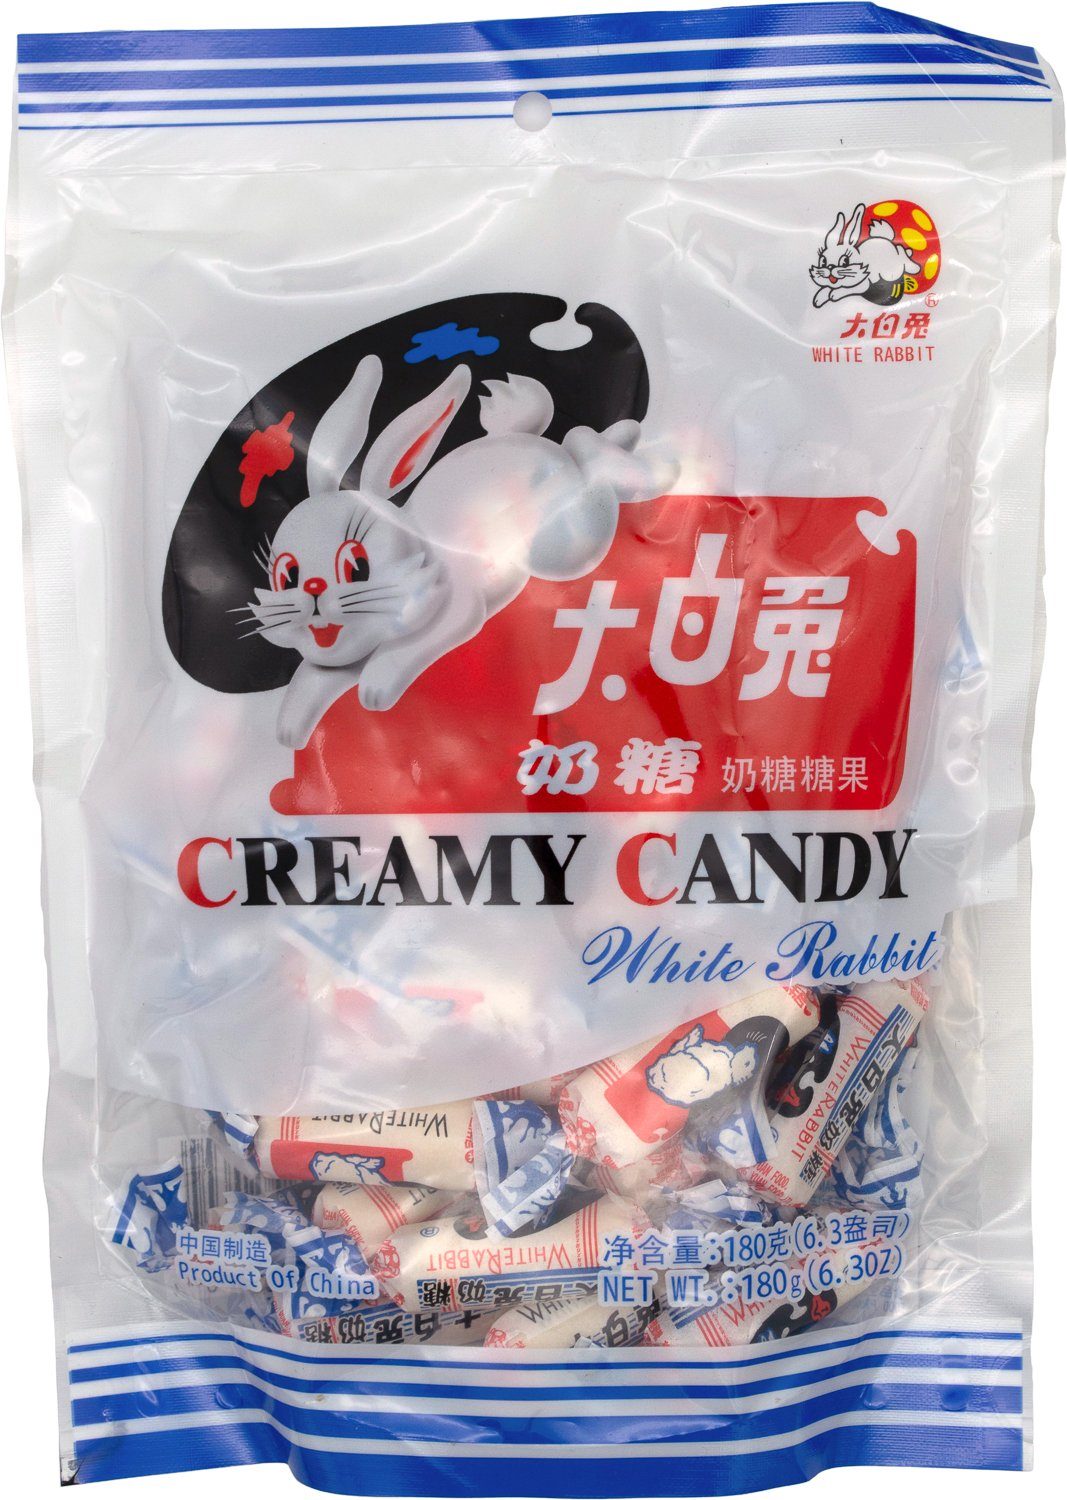 White Rabbit Candy White Rabbit Original 6.3 Ounce 